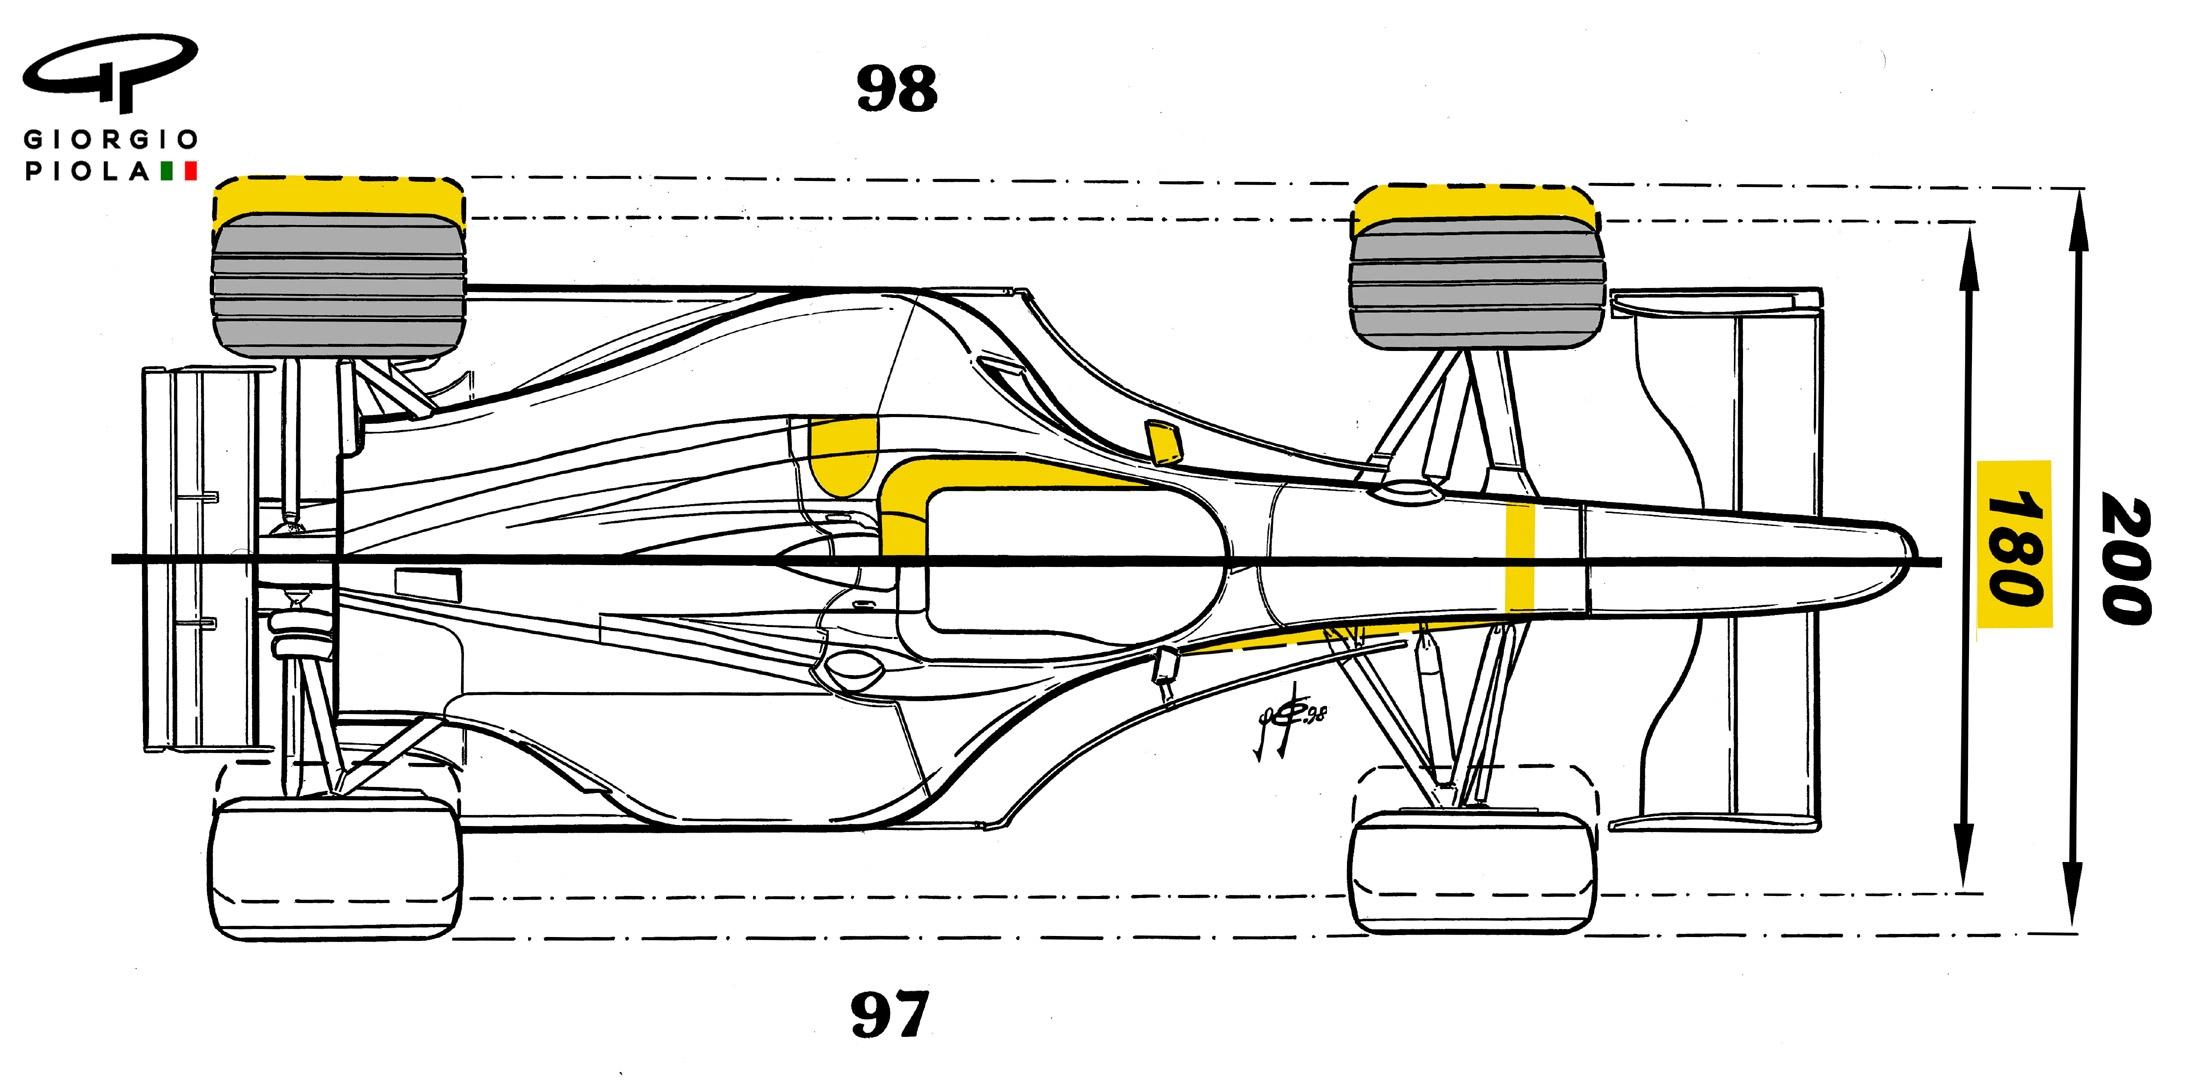 F1赛车平面图图片